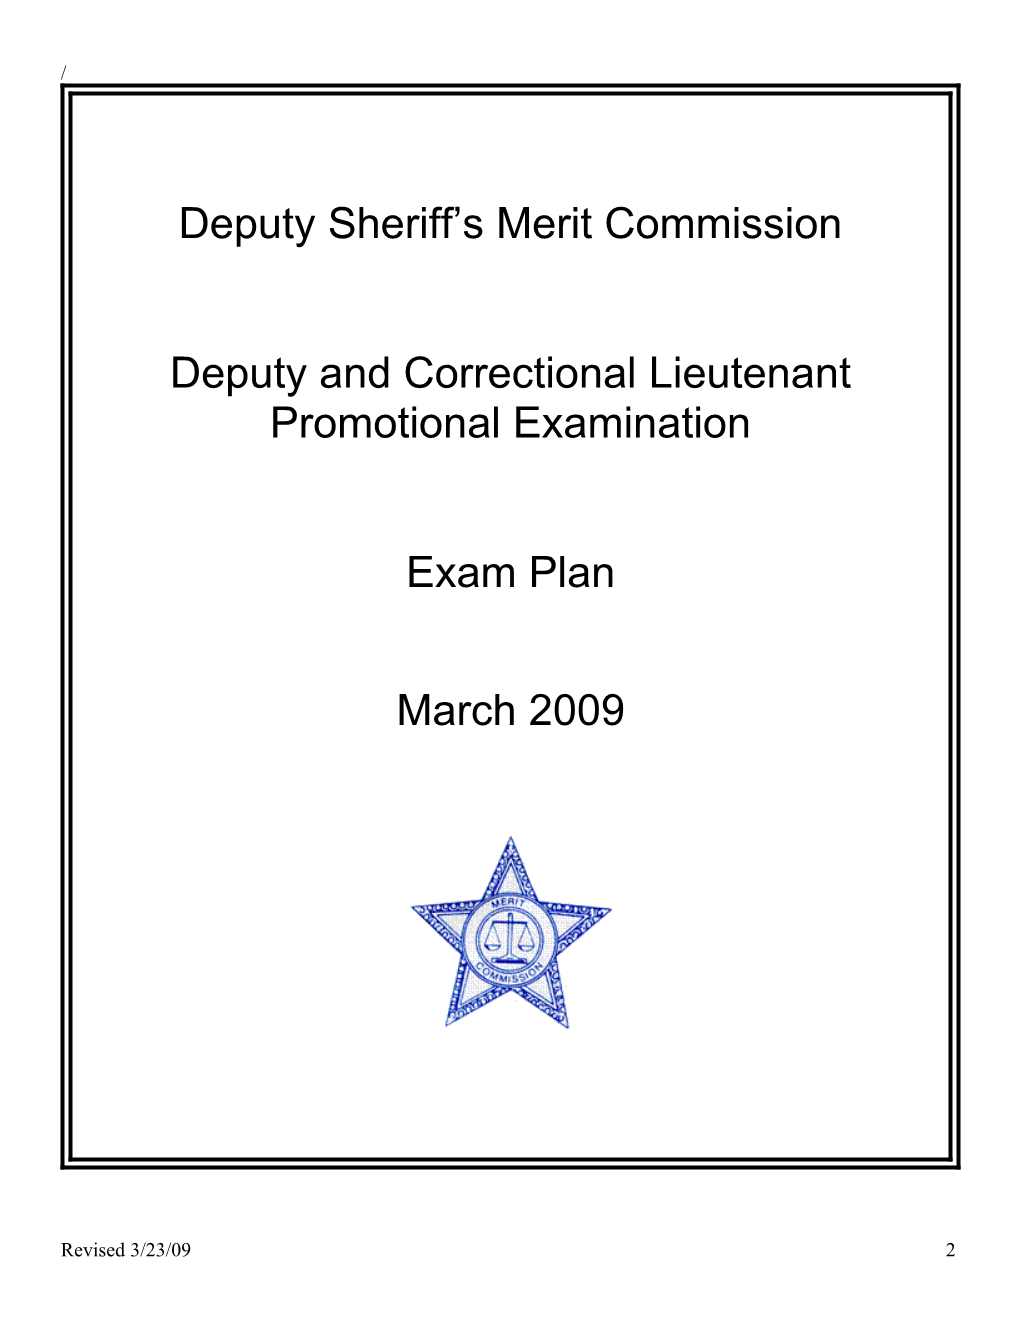 Deputy and Correctional Lieutenant Promotion Test